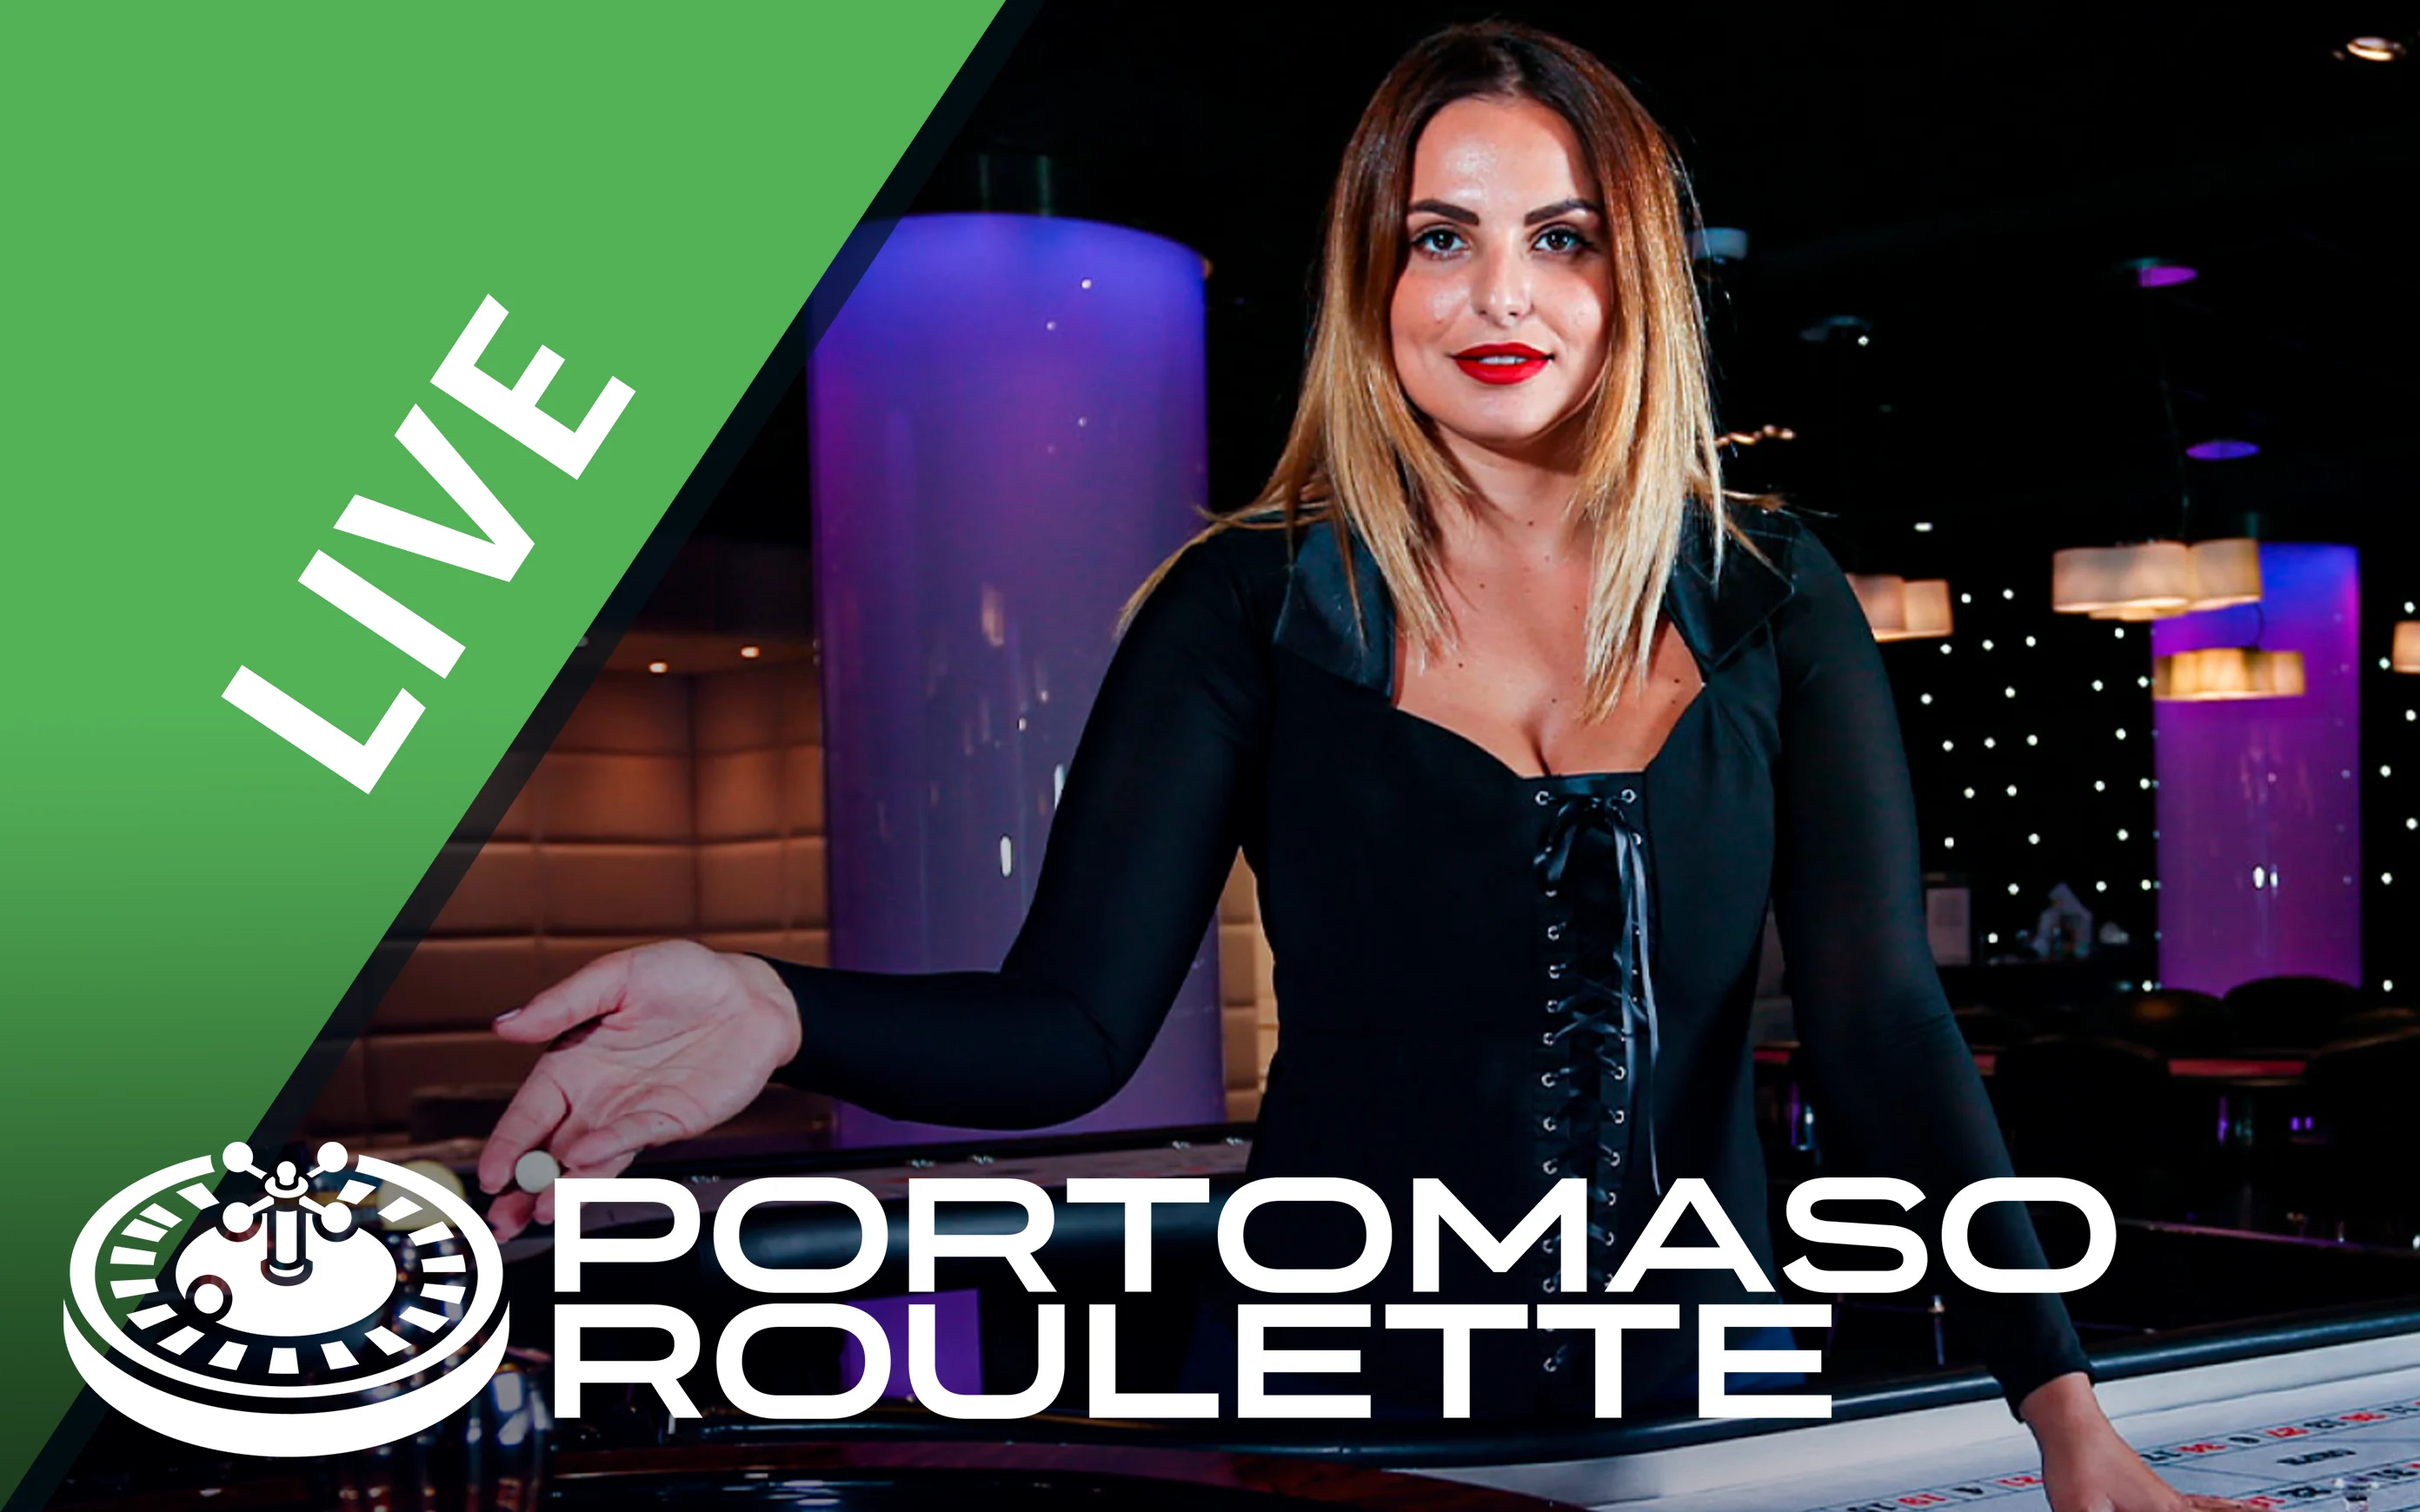 Play Portomaso Roulette on Starcasino.be online casino